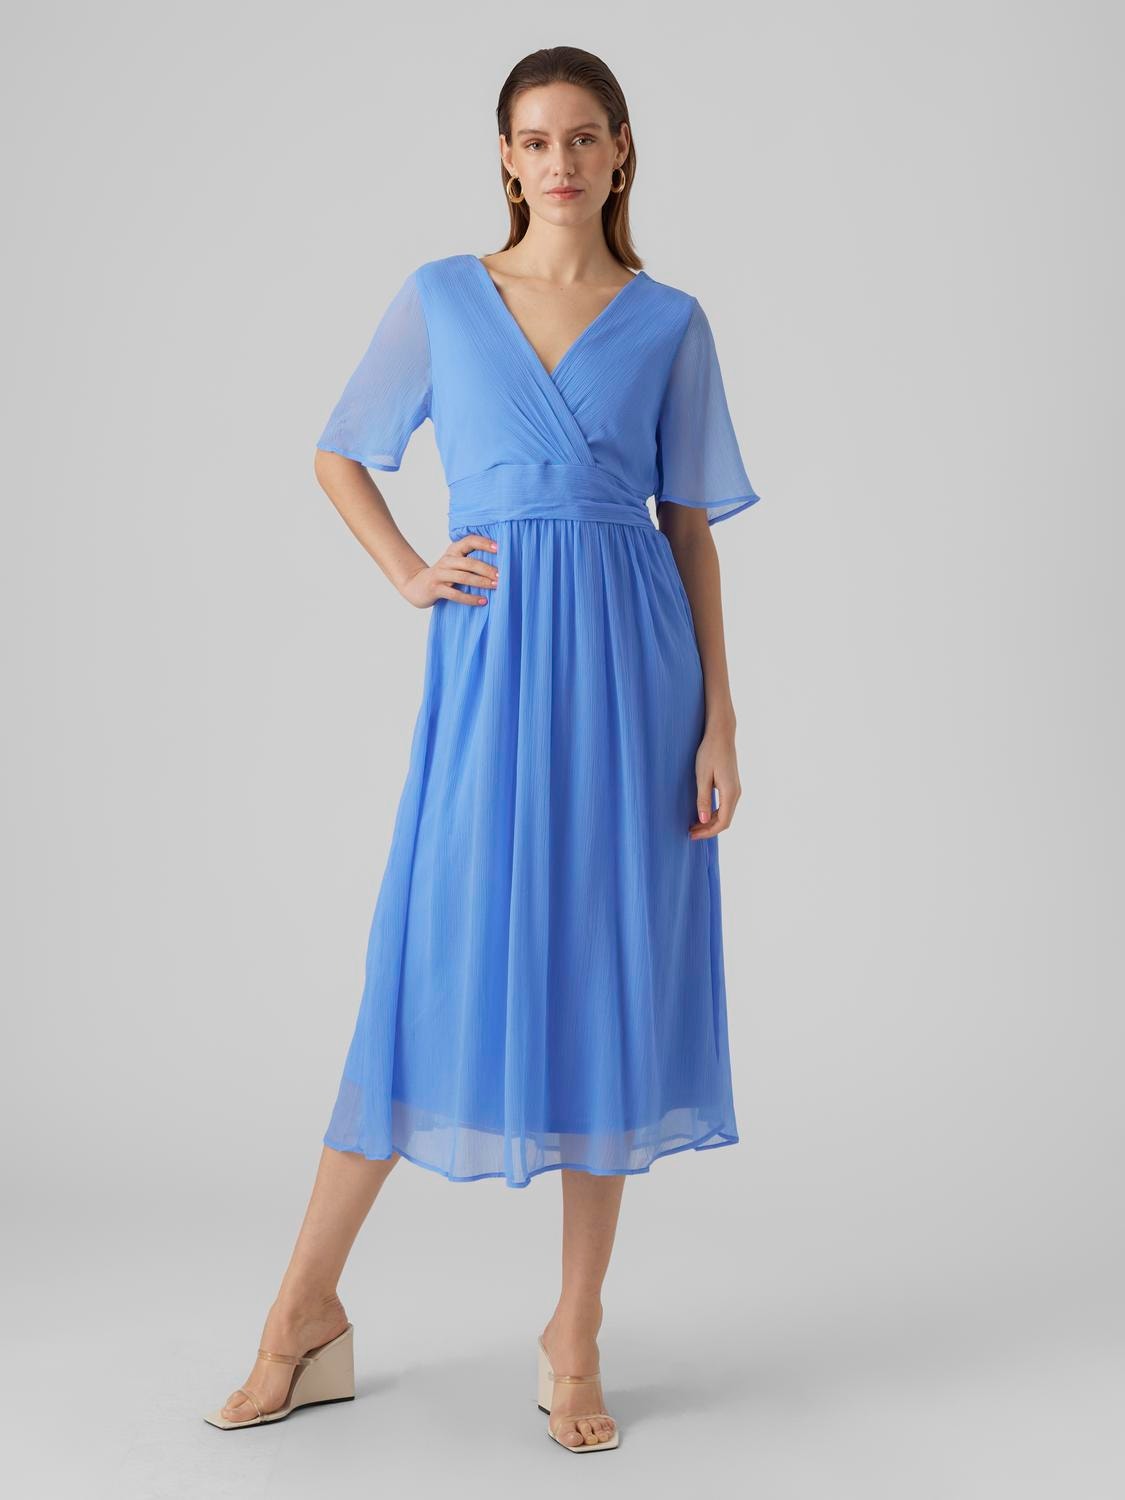 Fabrikant schelp opwinding lange jurk | Midden Blauw | Vero Moda®